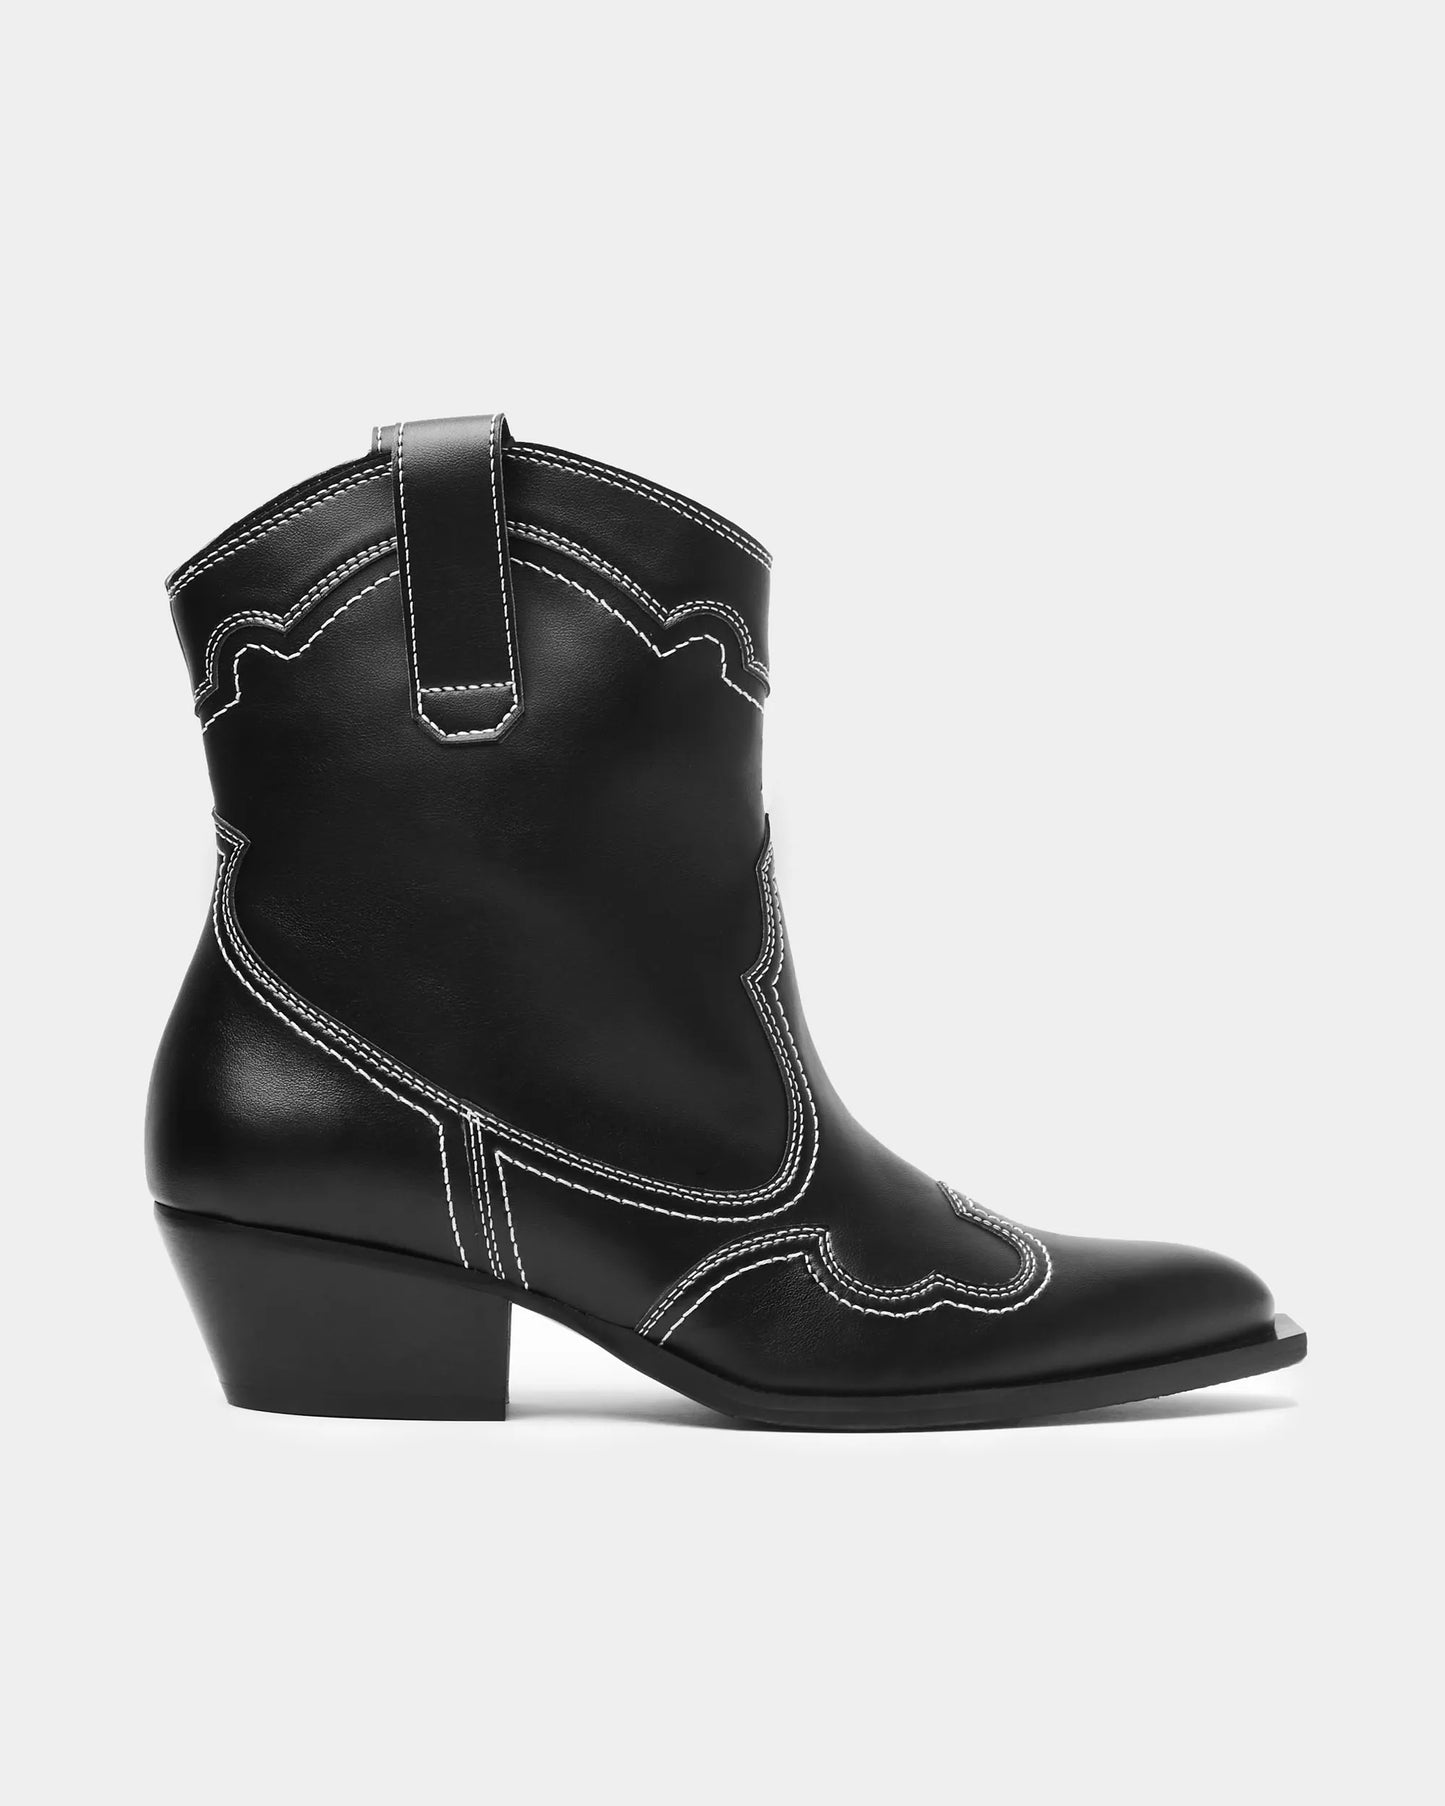 Stitchy Cowboy Boots made of Viridis corn leather